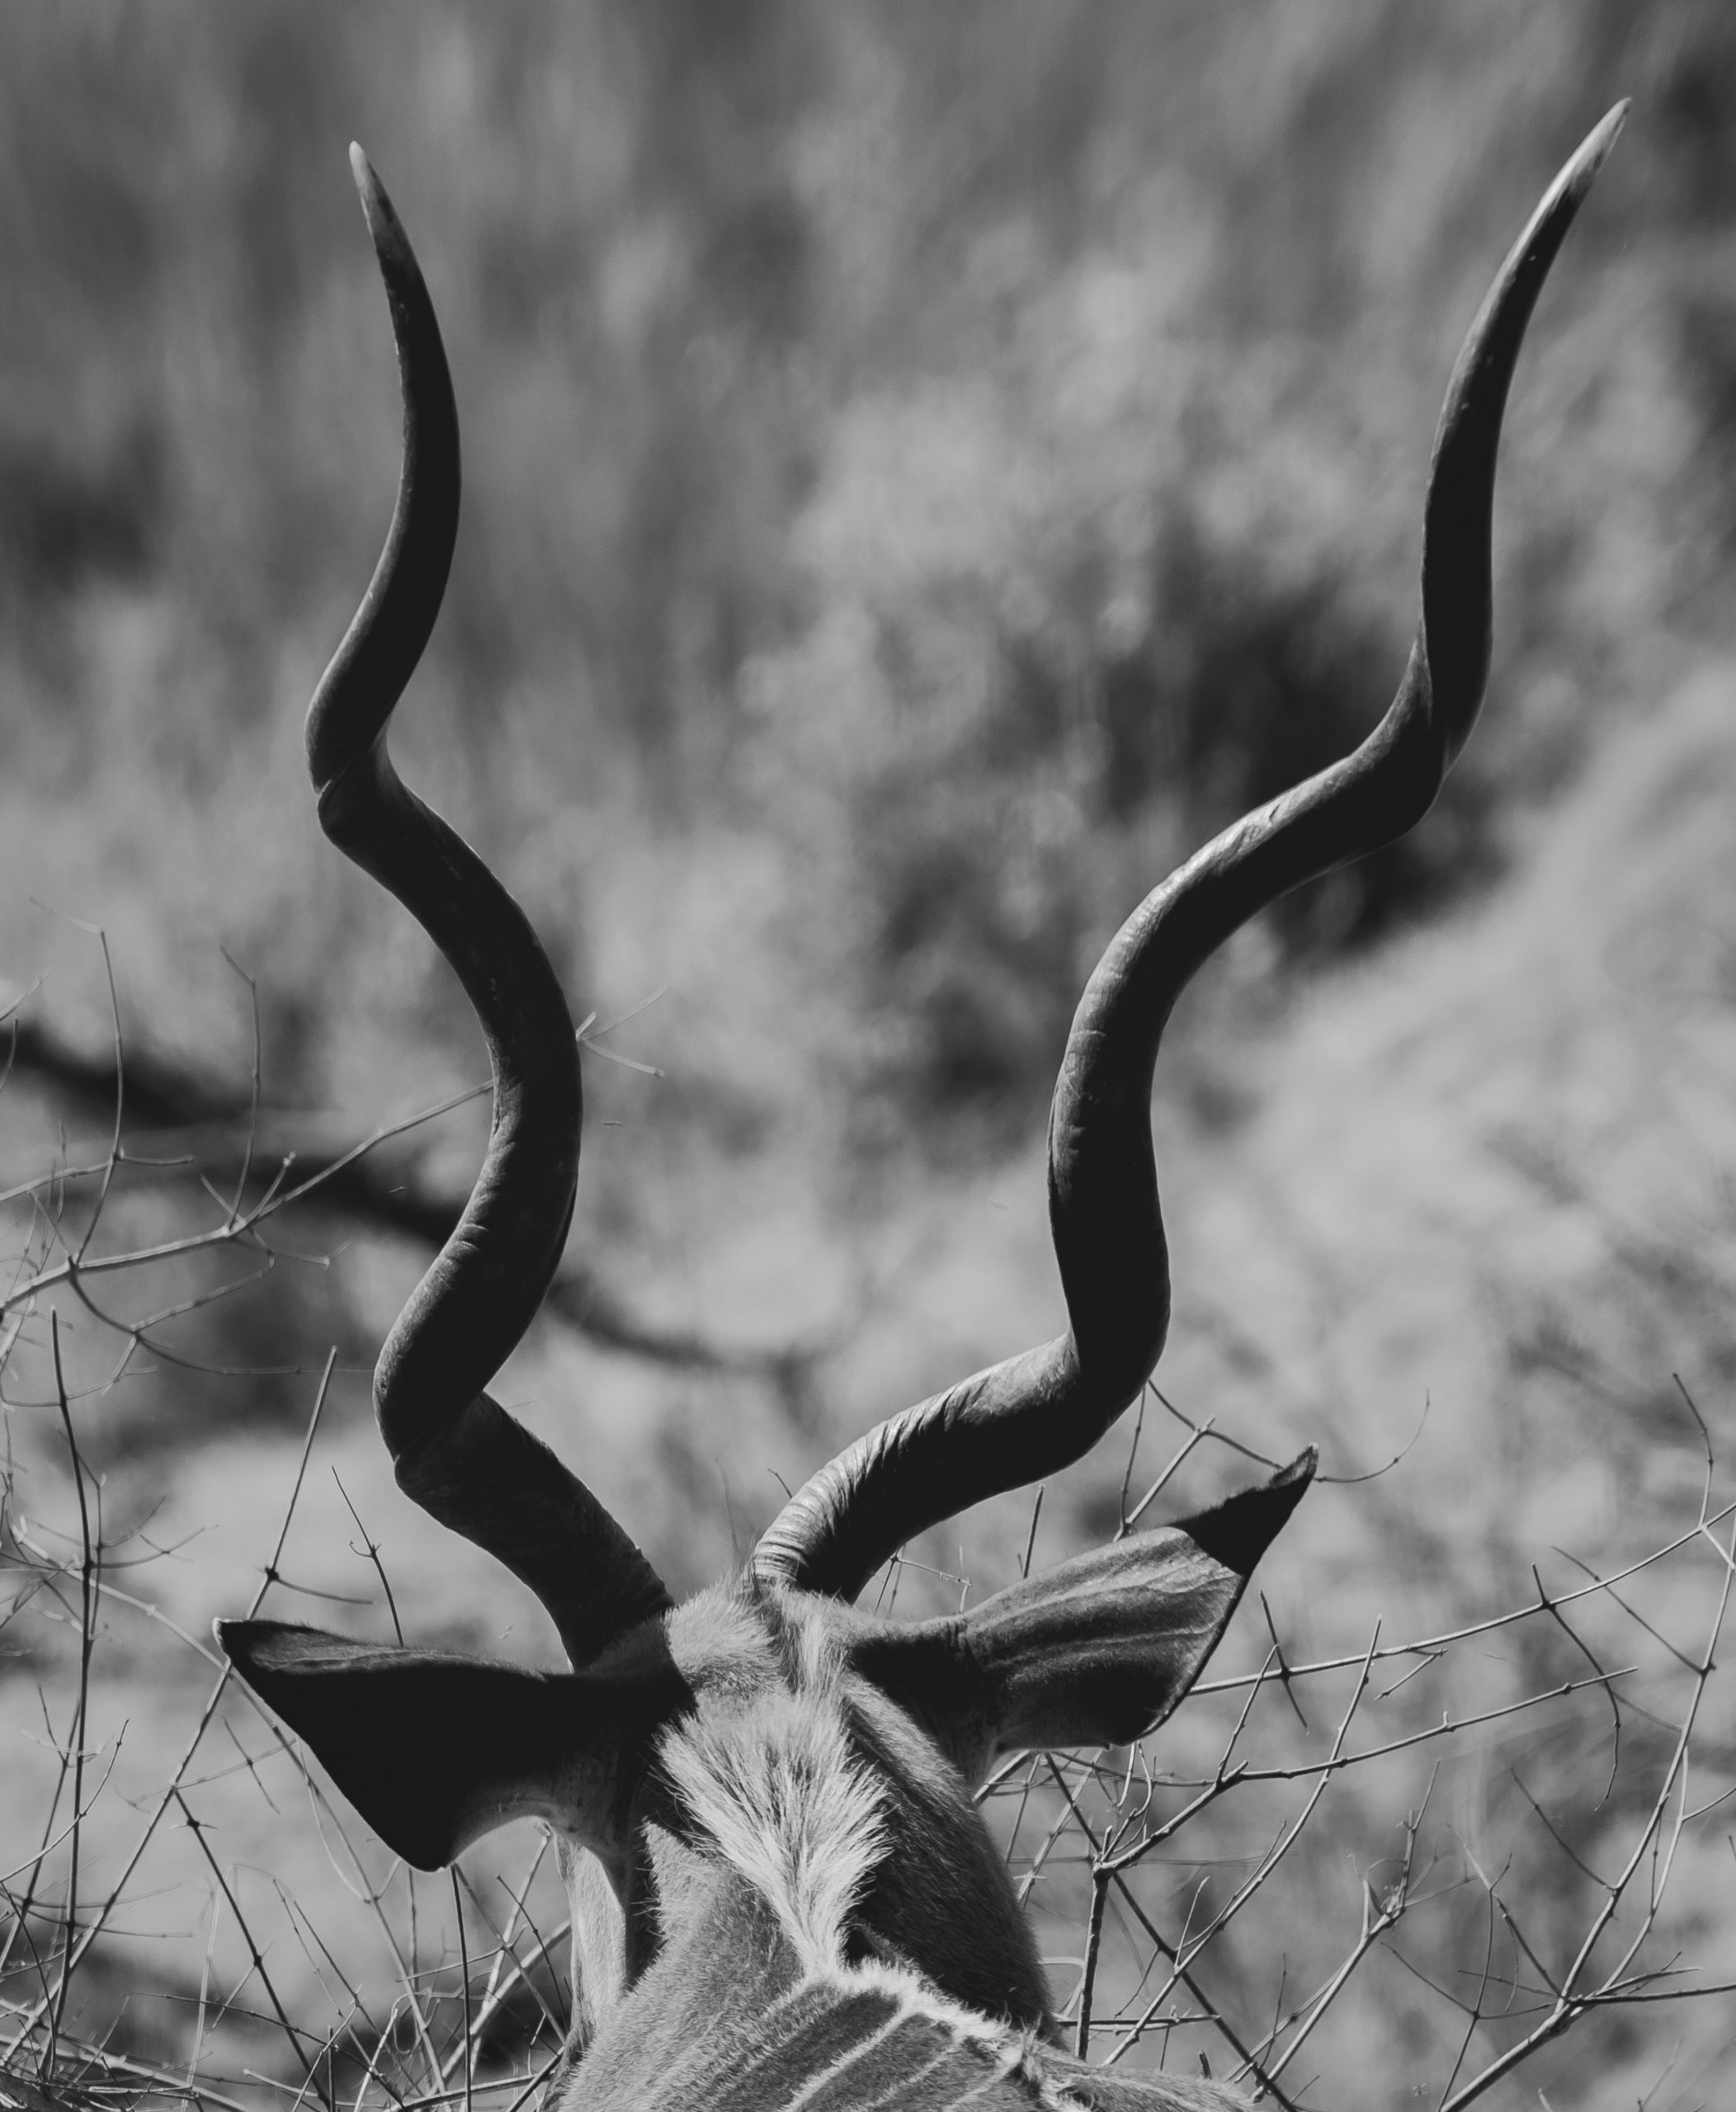 Kudu Horns